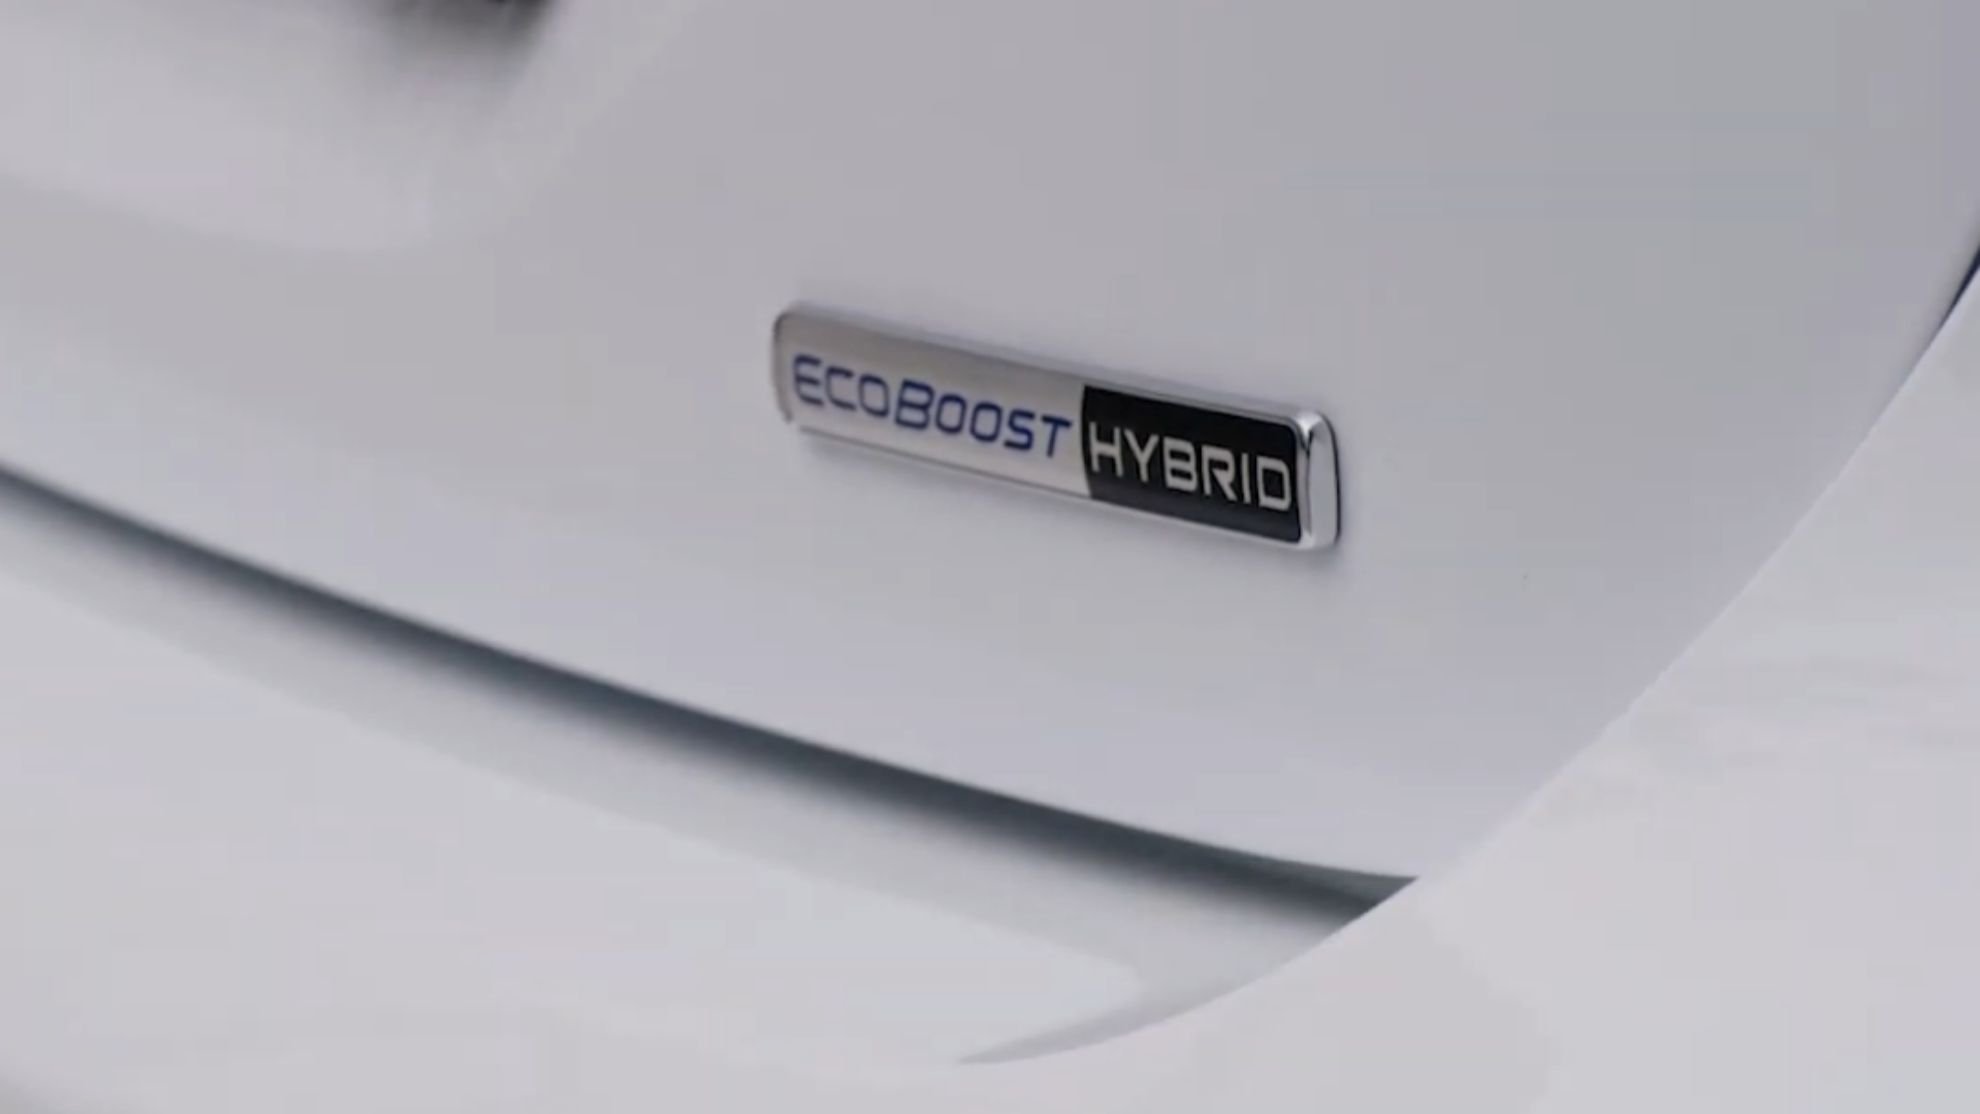 Ford Fiesta Mild Hybrid - hibrido ligero - Ecoboost - prueba